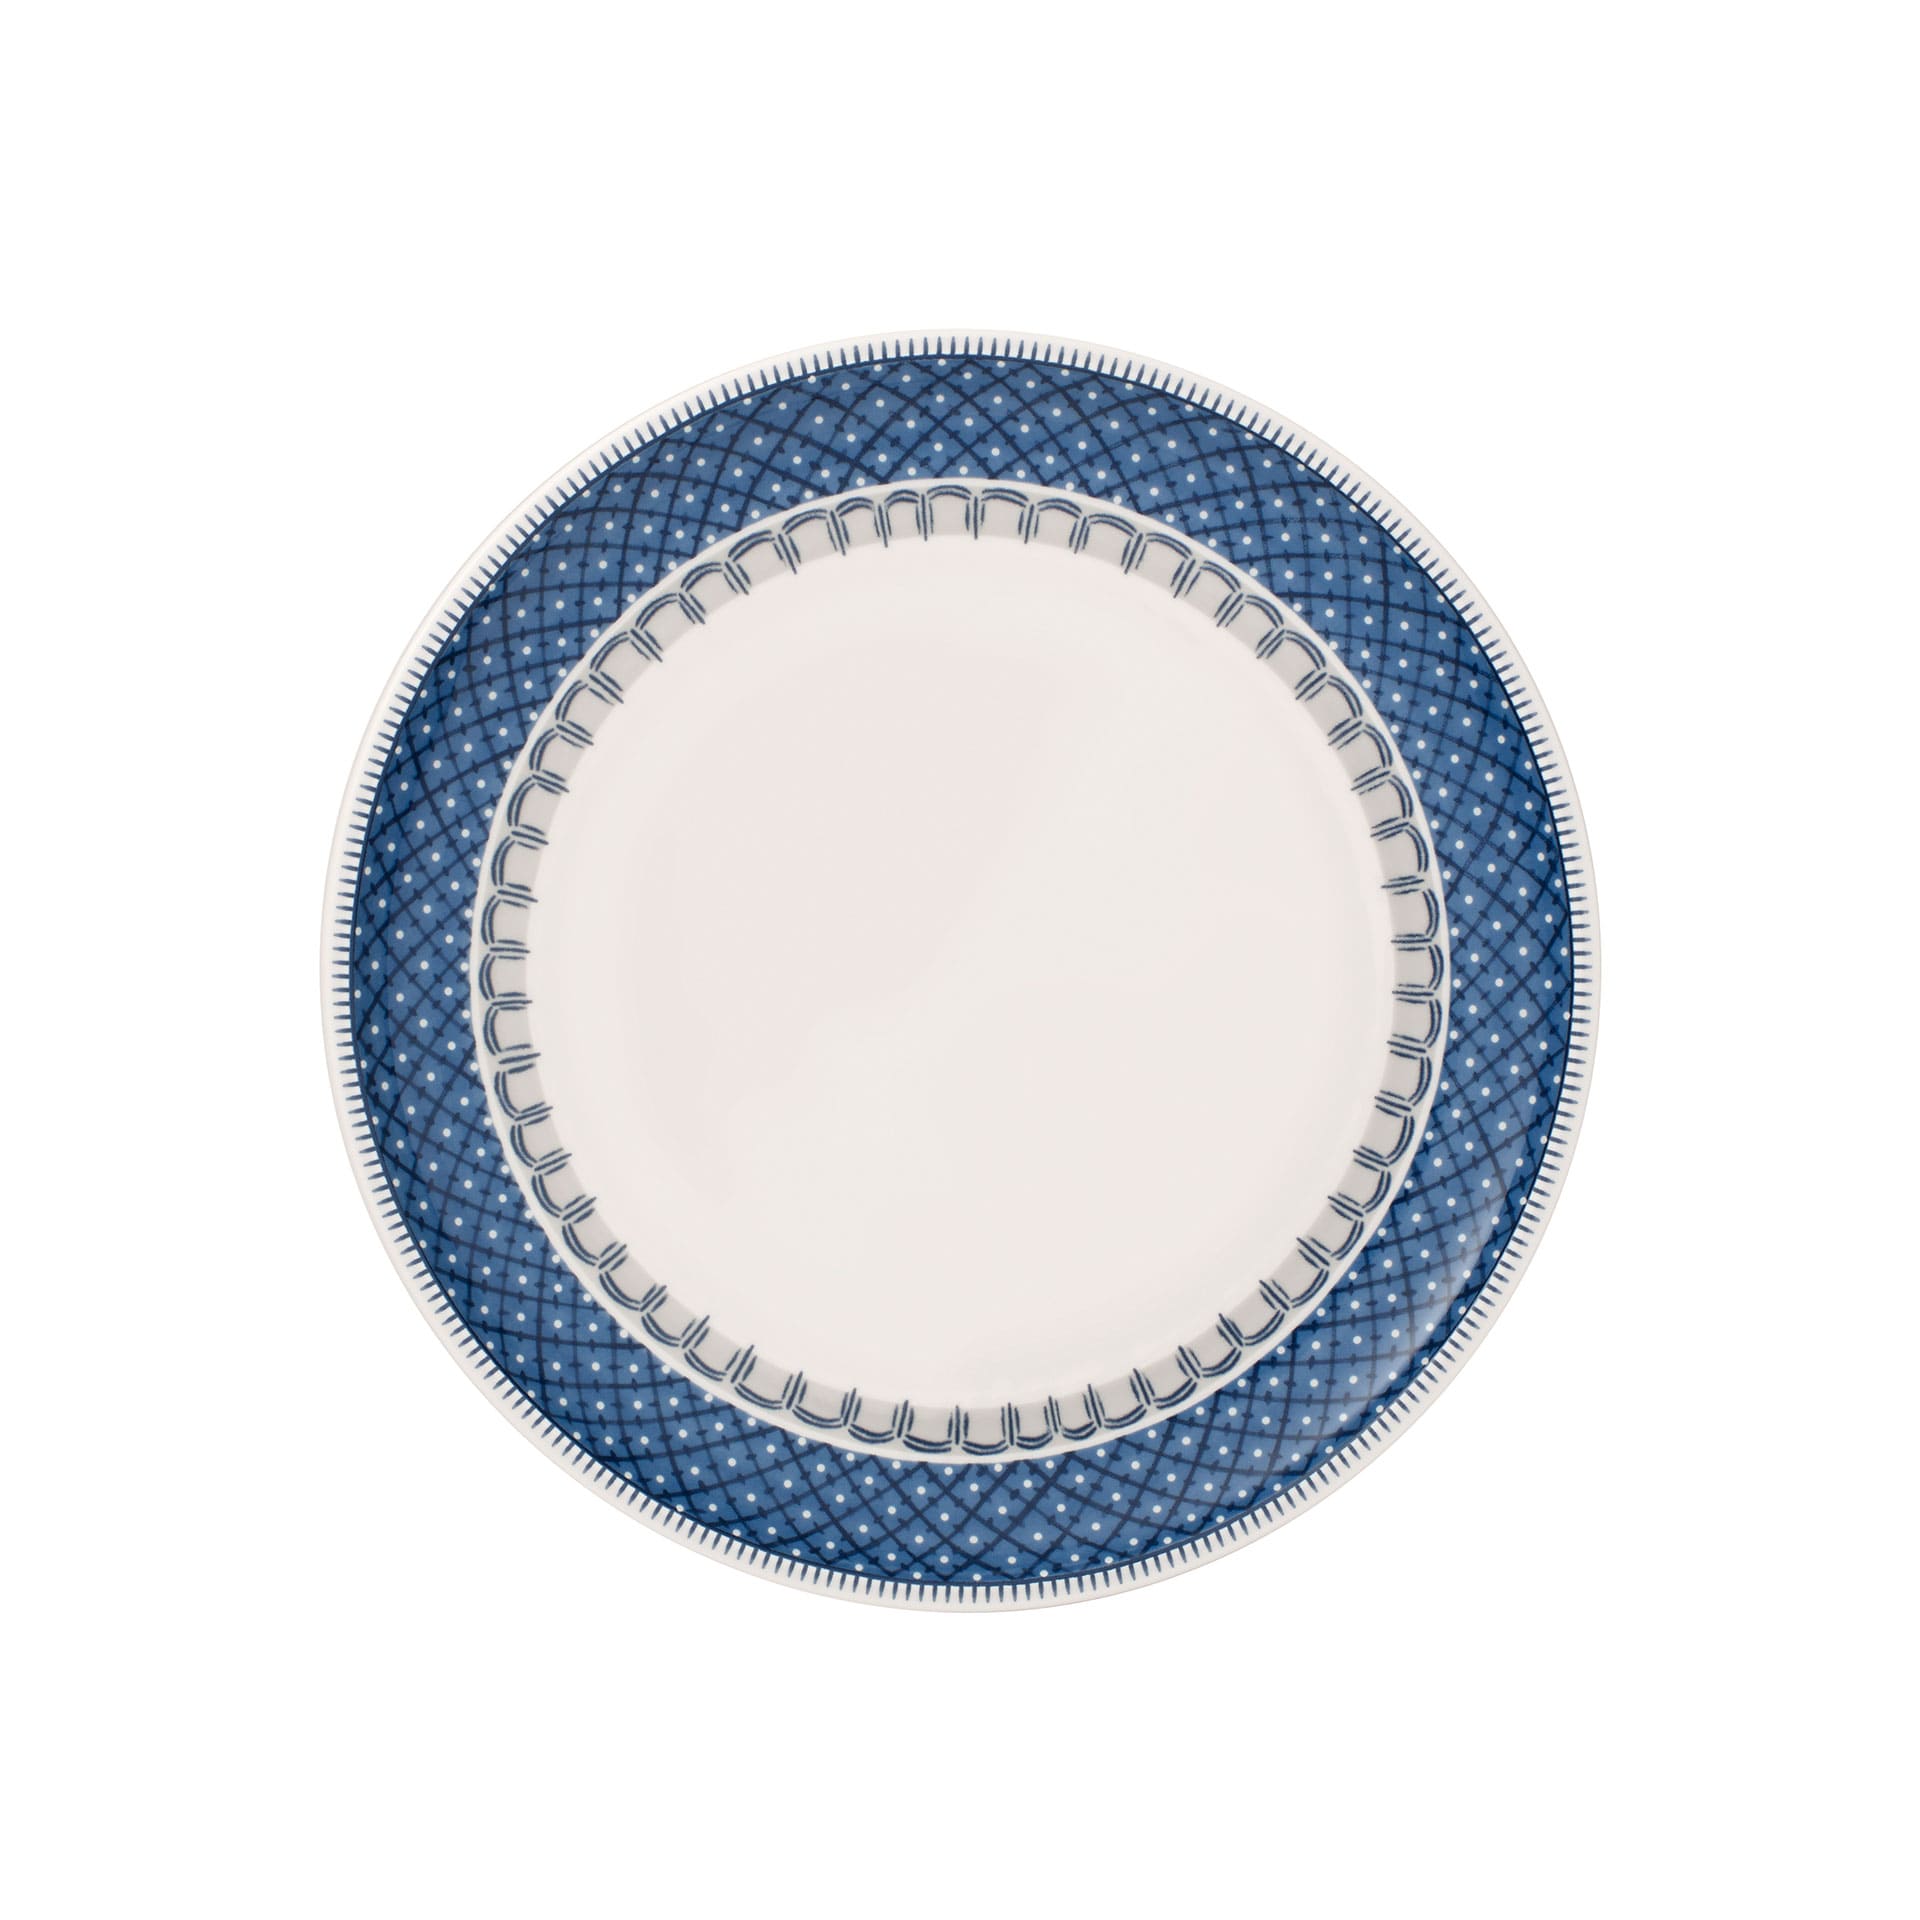 Casale Blu flat plate VilleroyBoch